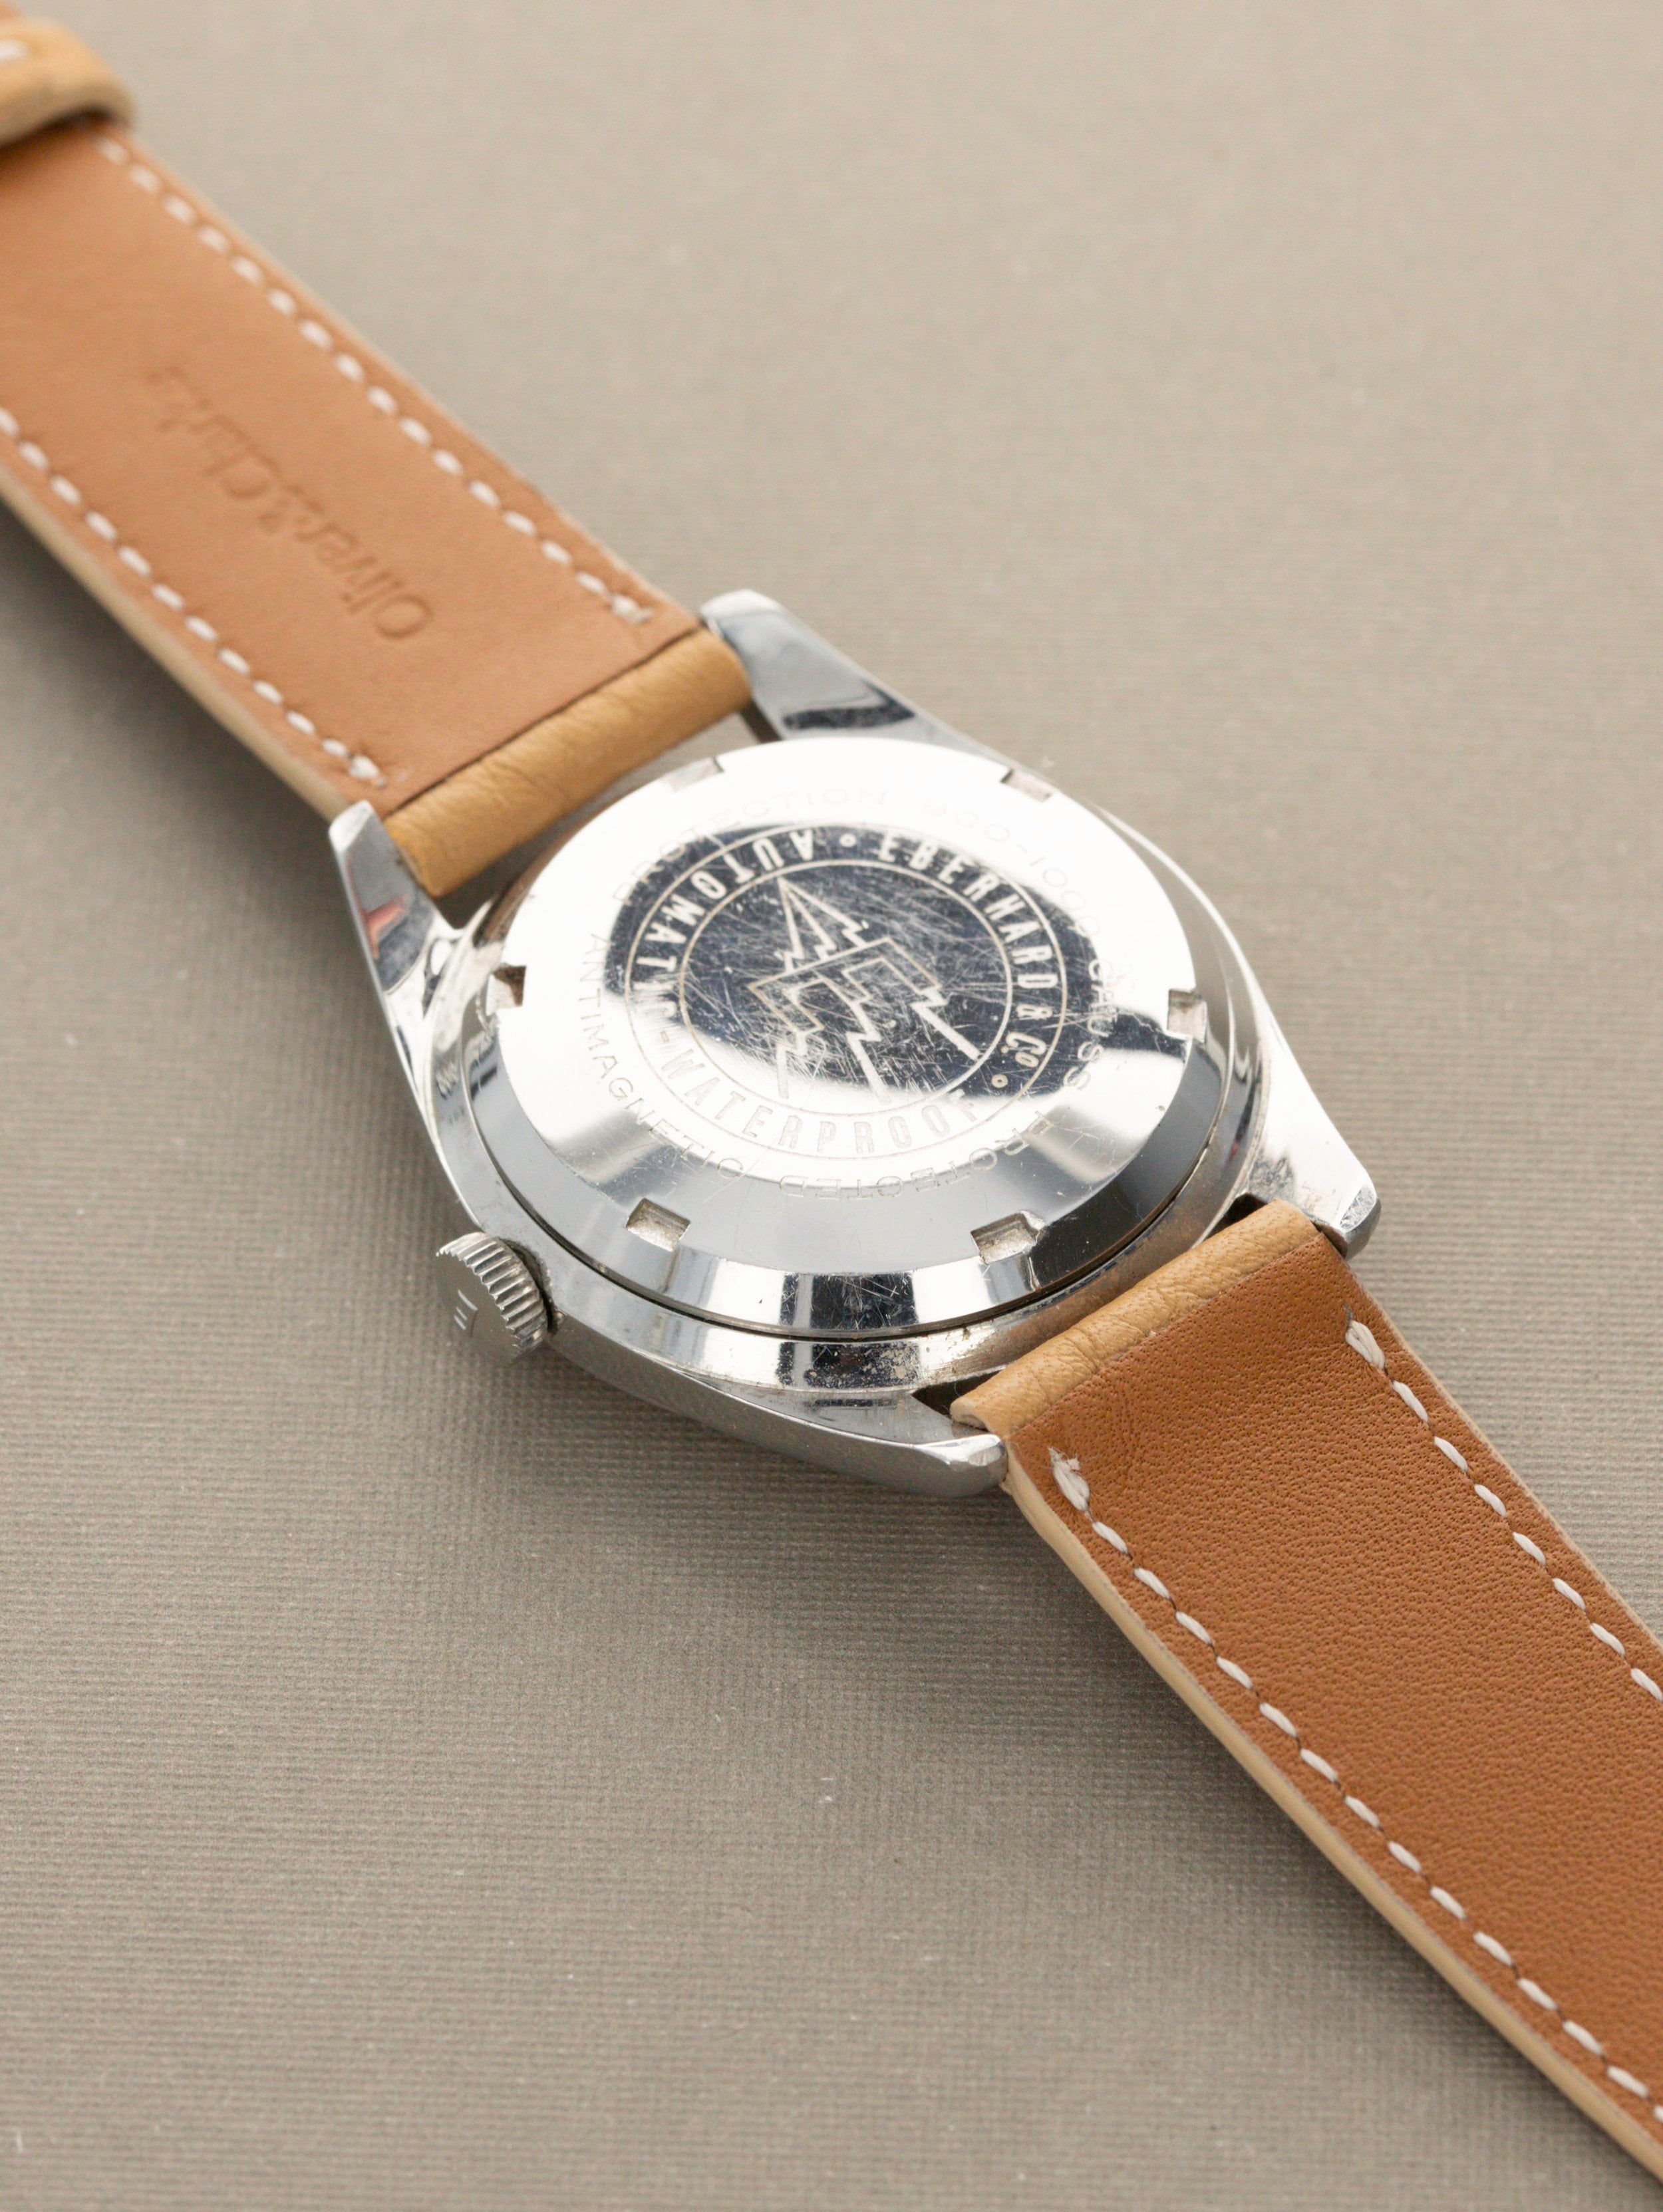 Eberhard Scientigraf - A Rare Antimagnetic Watch